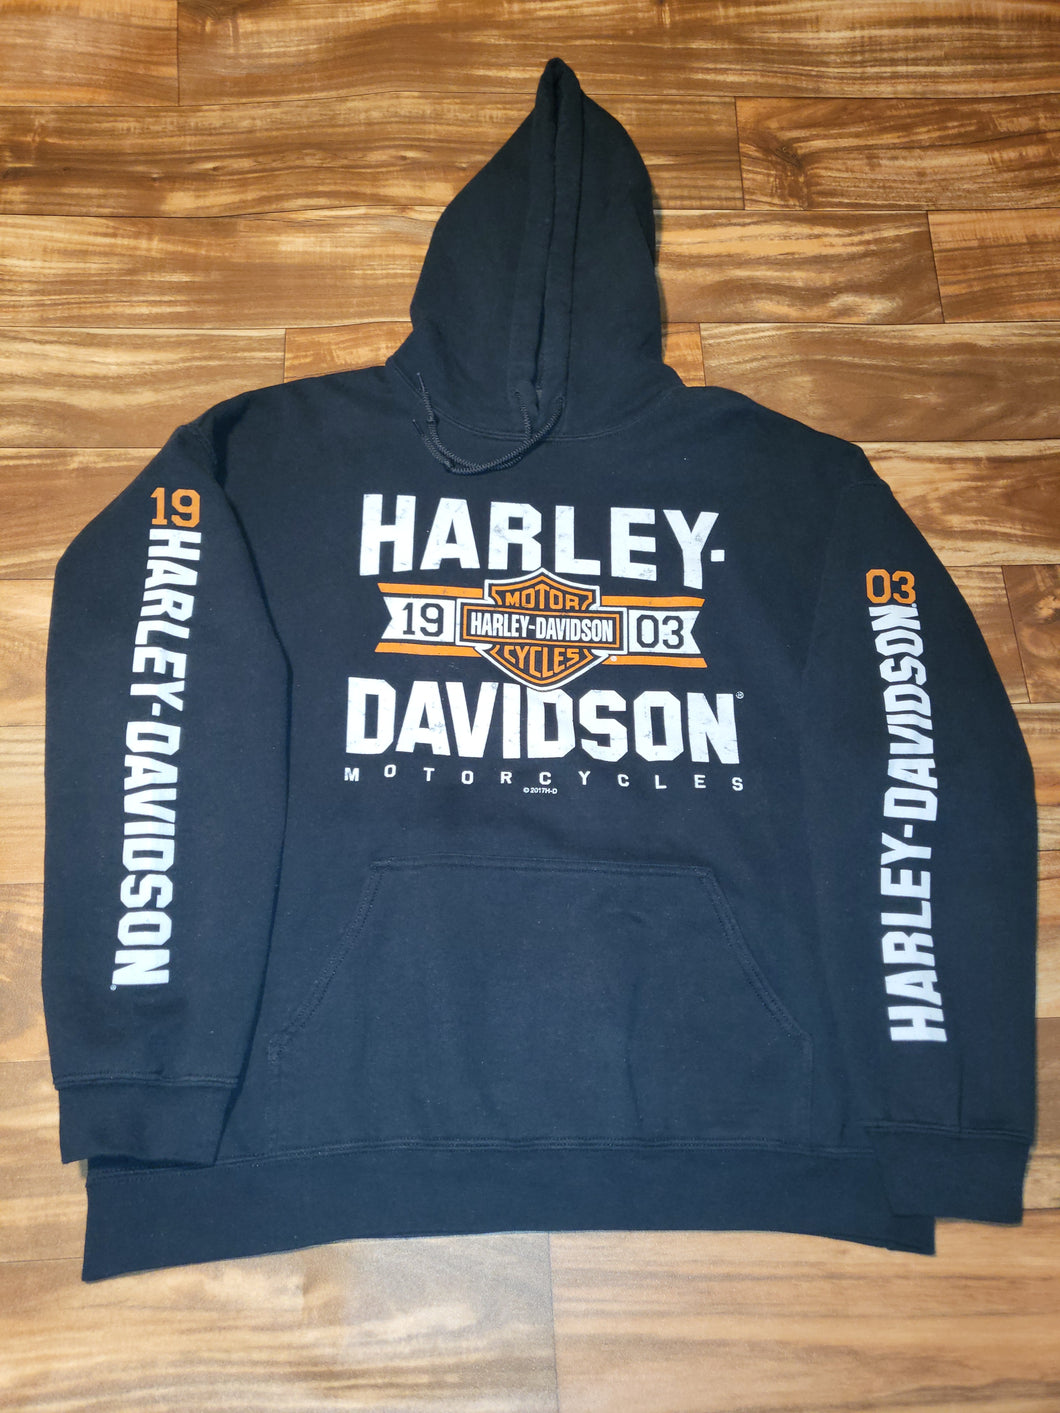 XL - Harley Davidson Motorcycles 2017 Sweatshirt